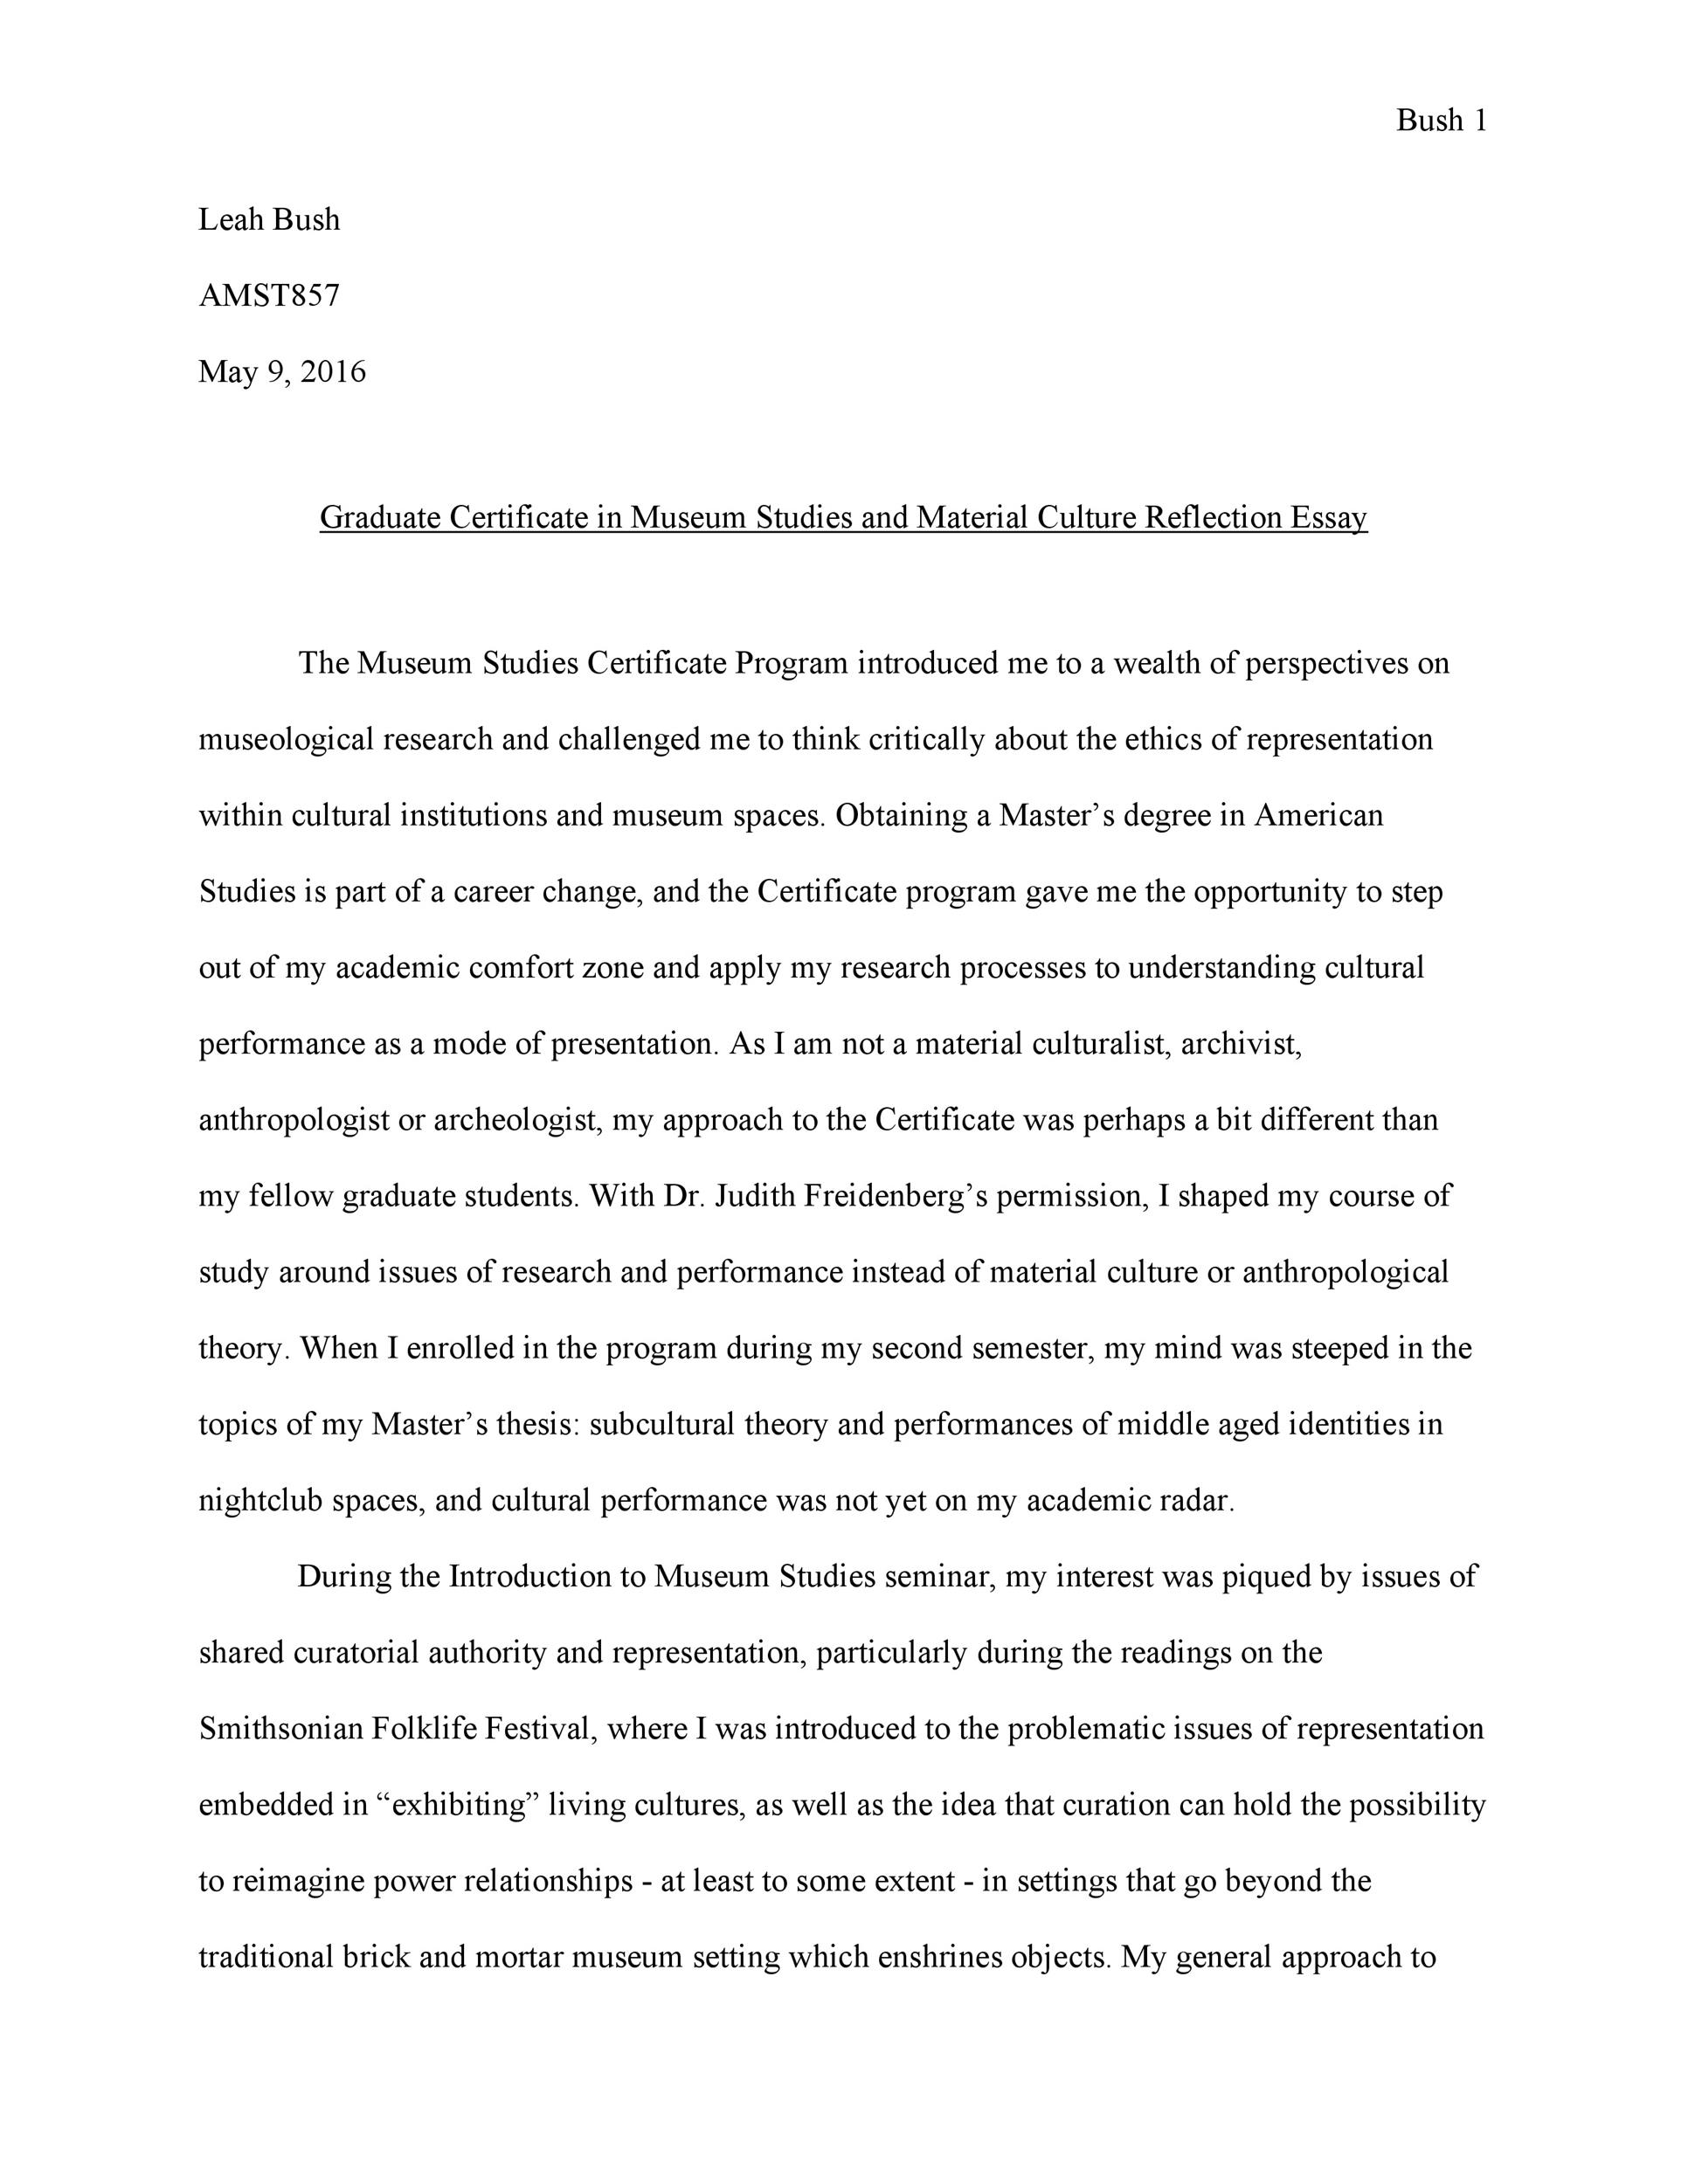 graduate reflection essay